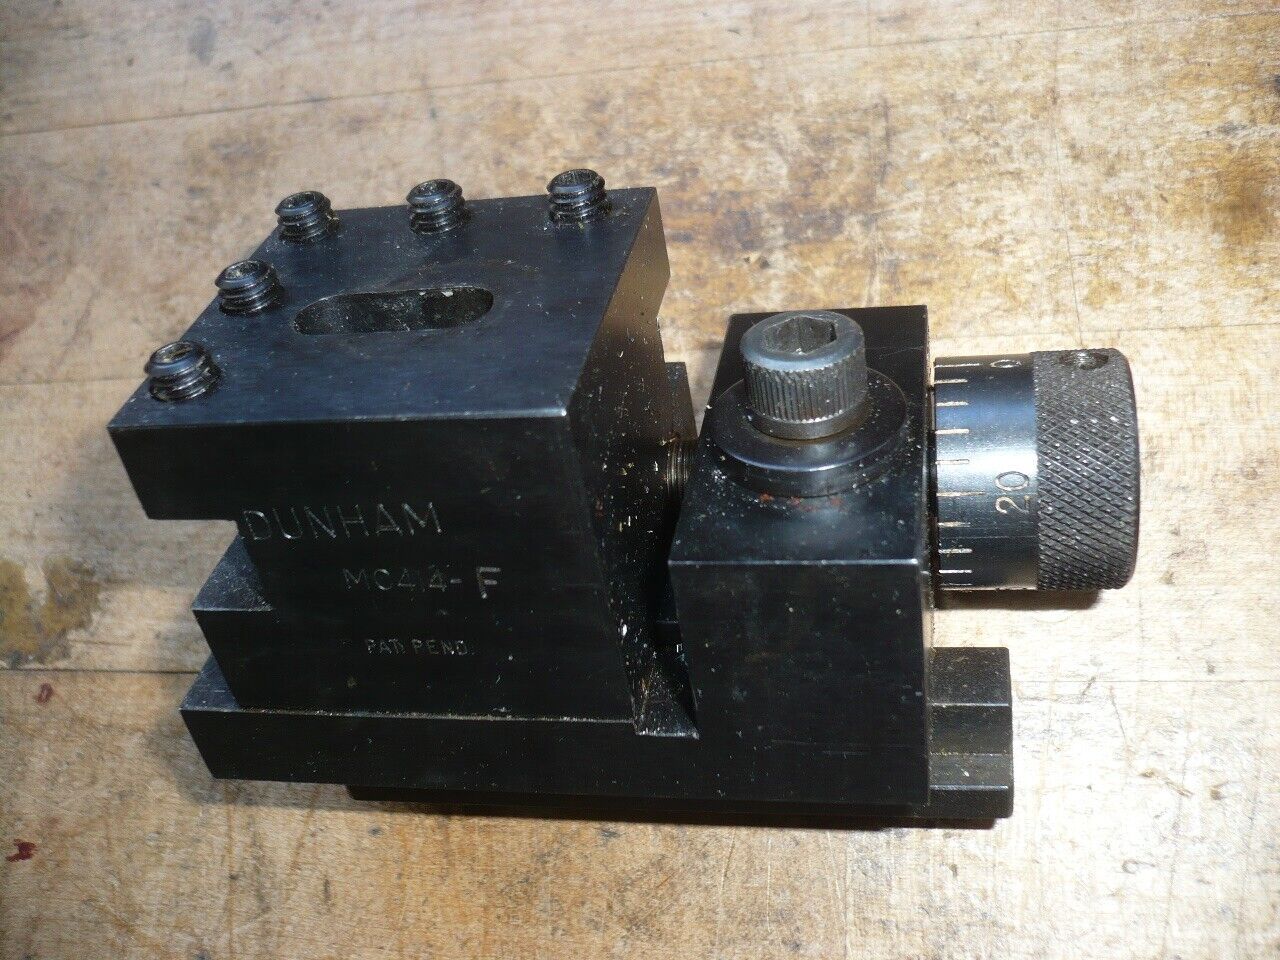 Dunham MC414-F adjustable tool holder, gang, turret, chucker, lathe, Hardinge